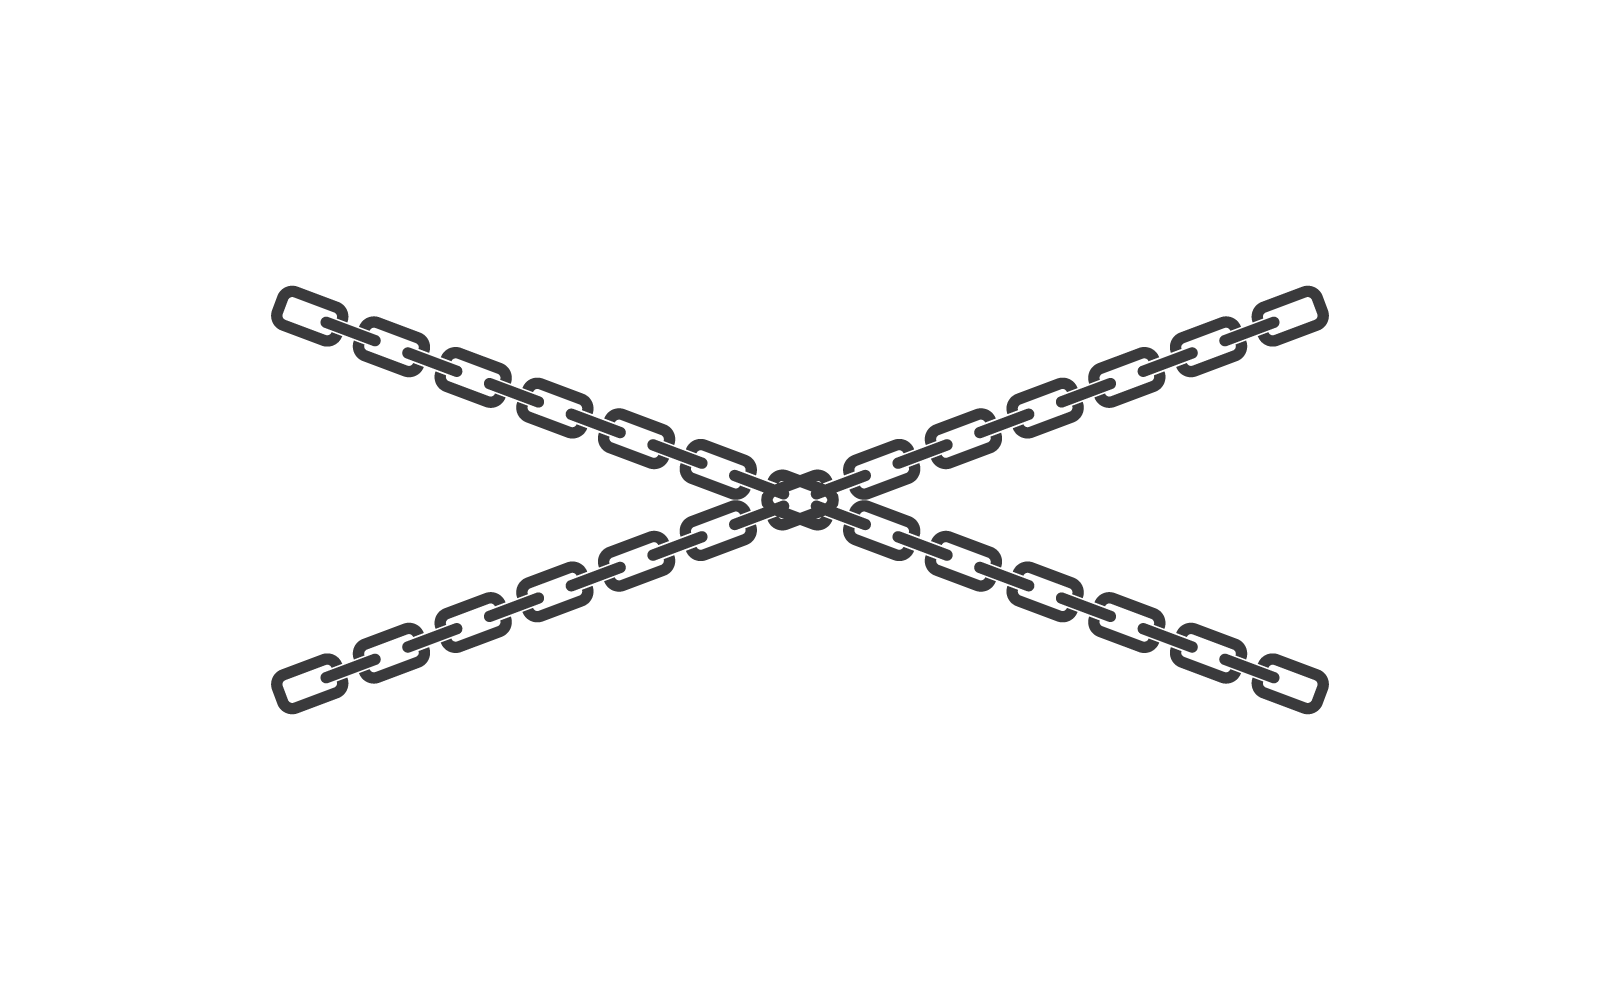 Chain vector logo design illustration